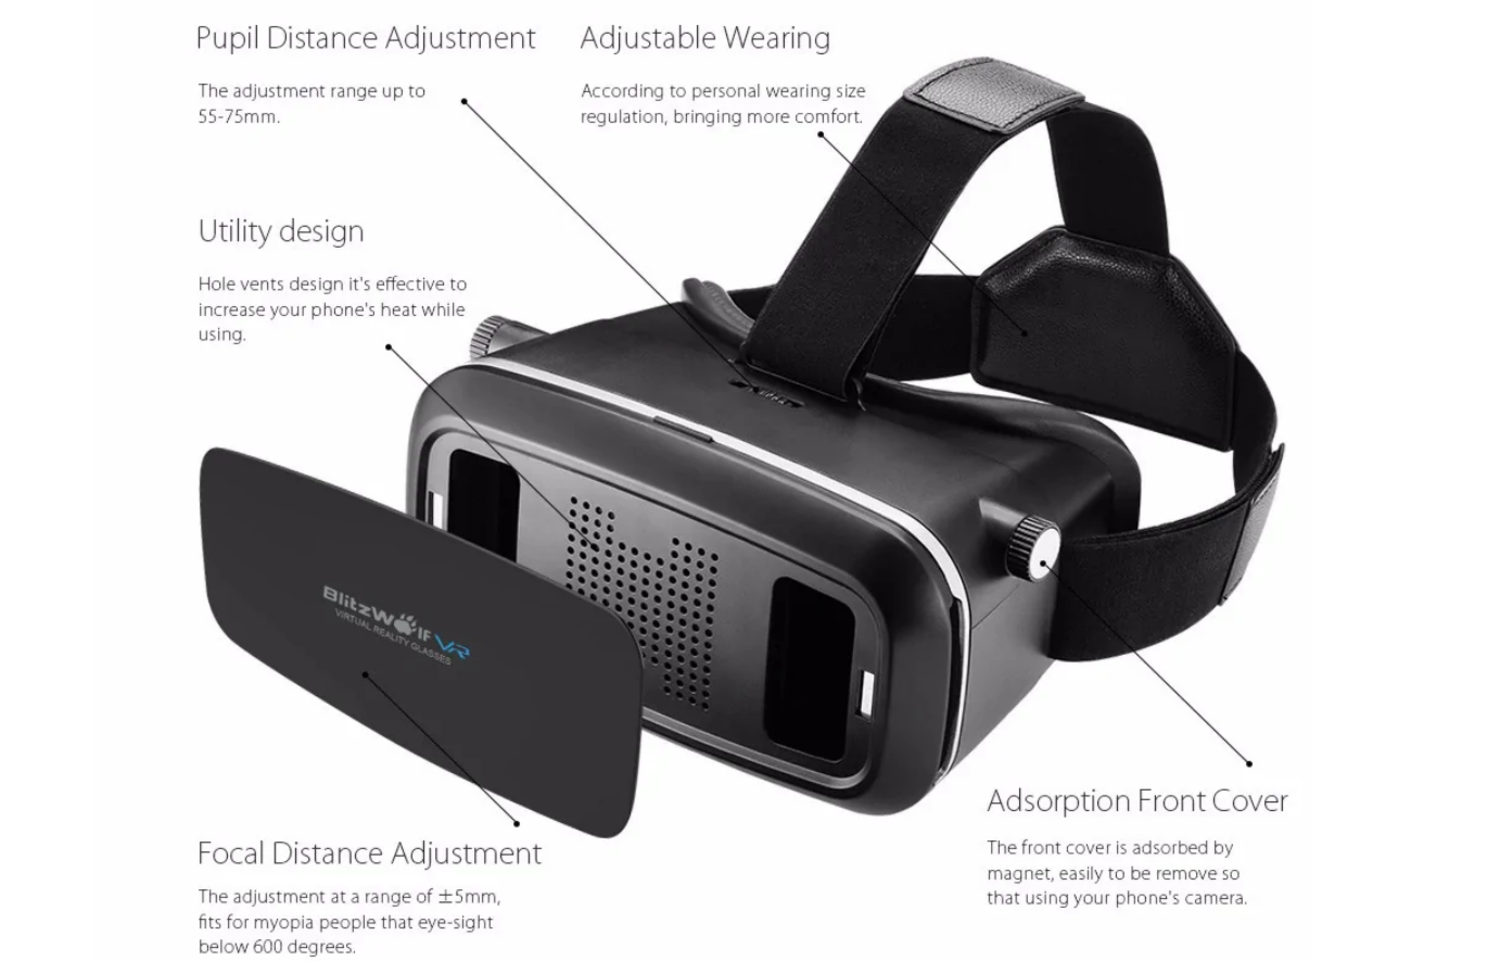 BlitzWolf VR2 Virtual Headset Review